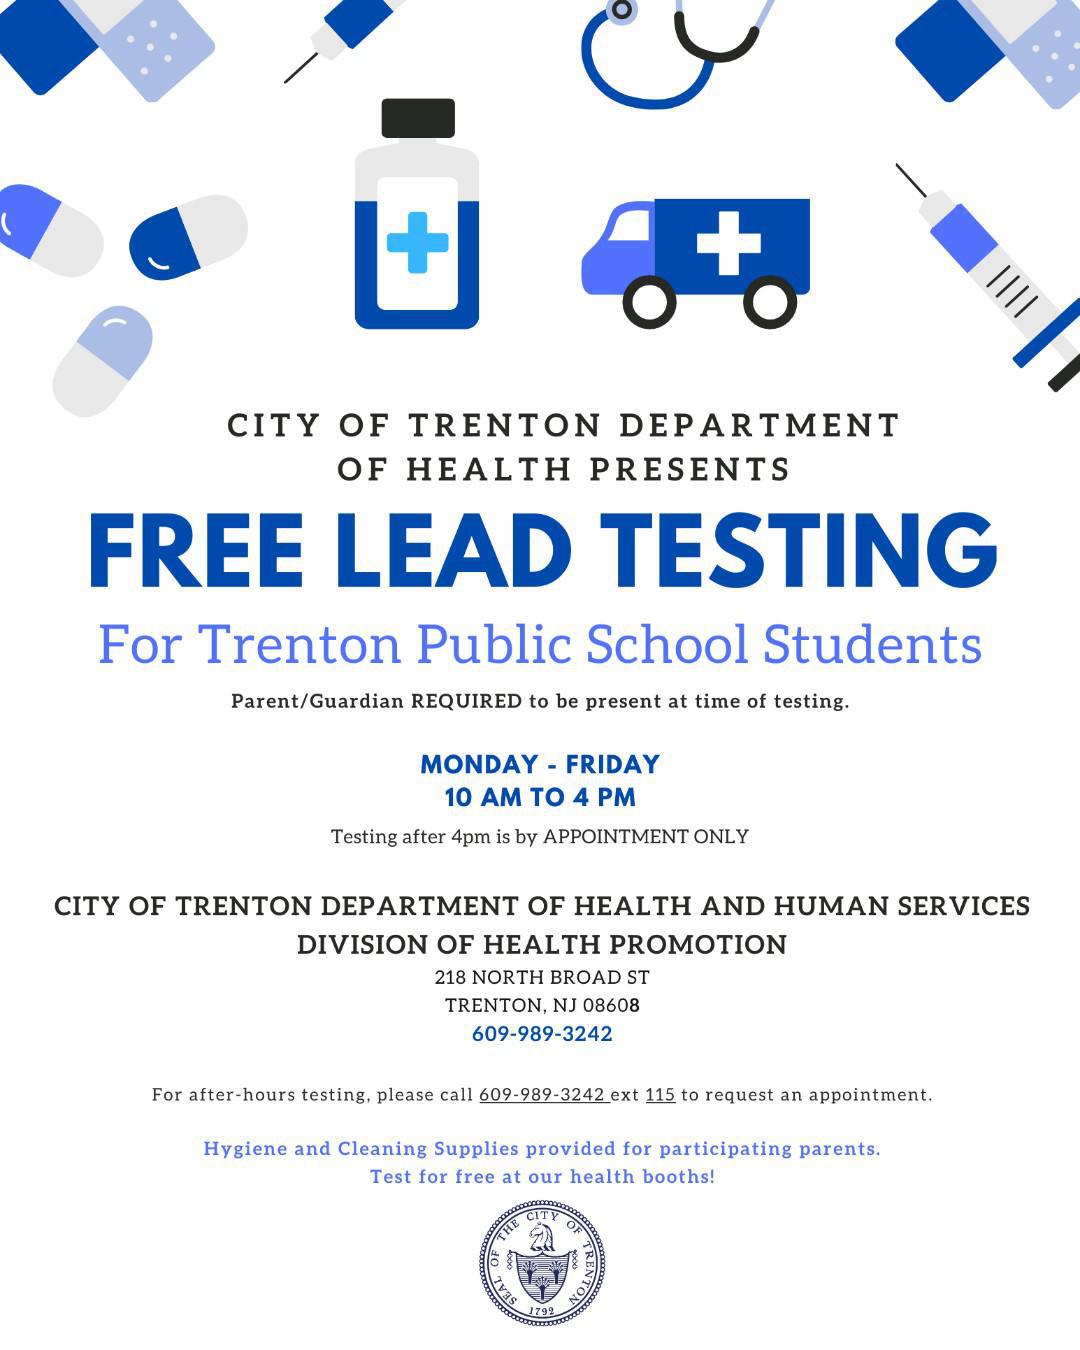 Free lead testing at 218 North Broad Street for Trenton Public School